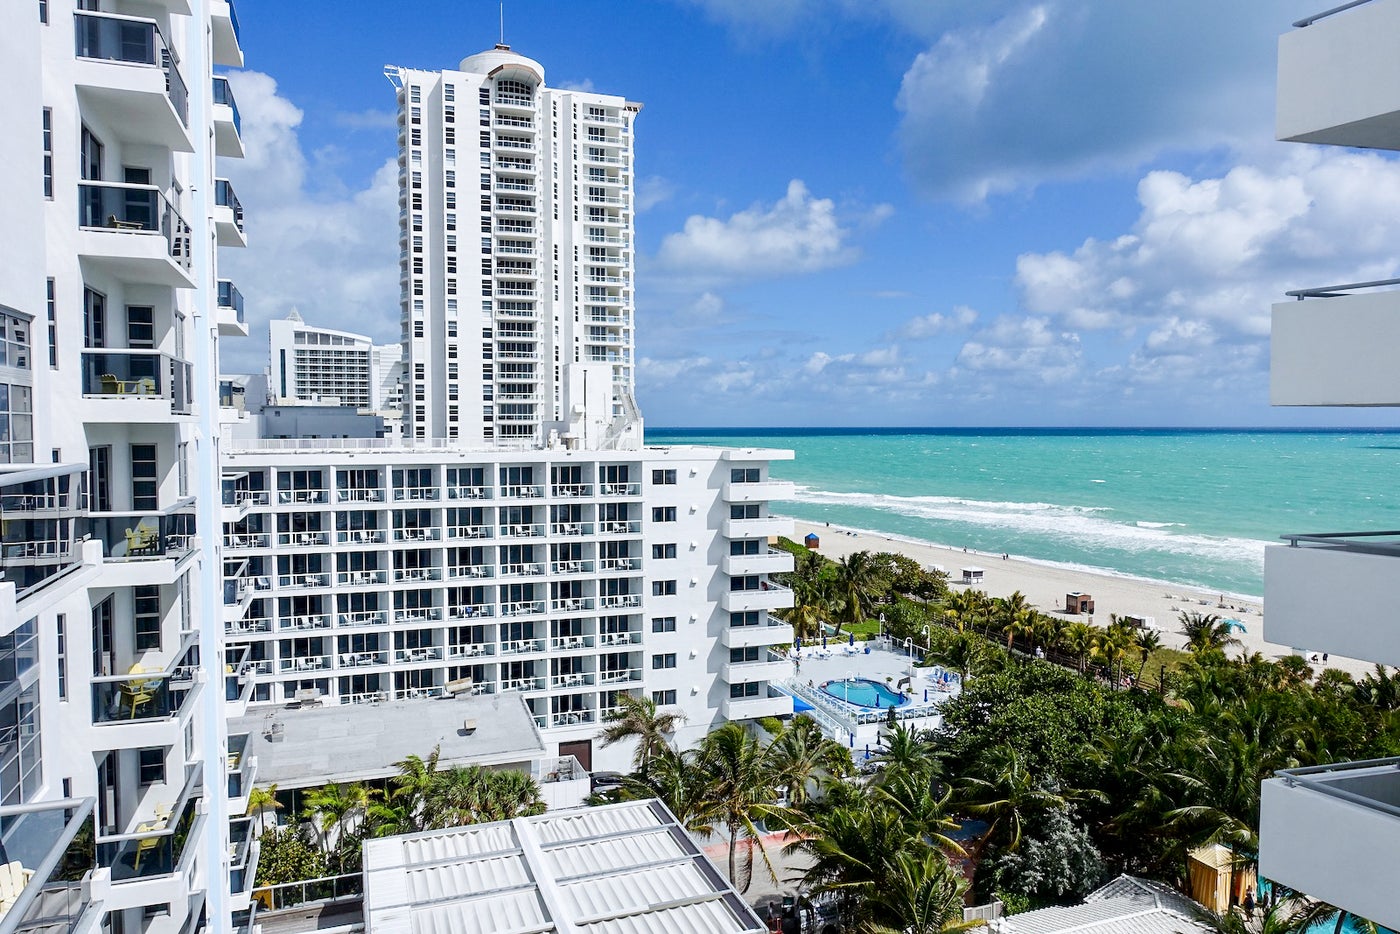 Review: The Confidante Miami Beach by Hyatt